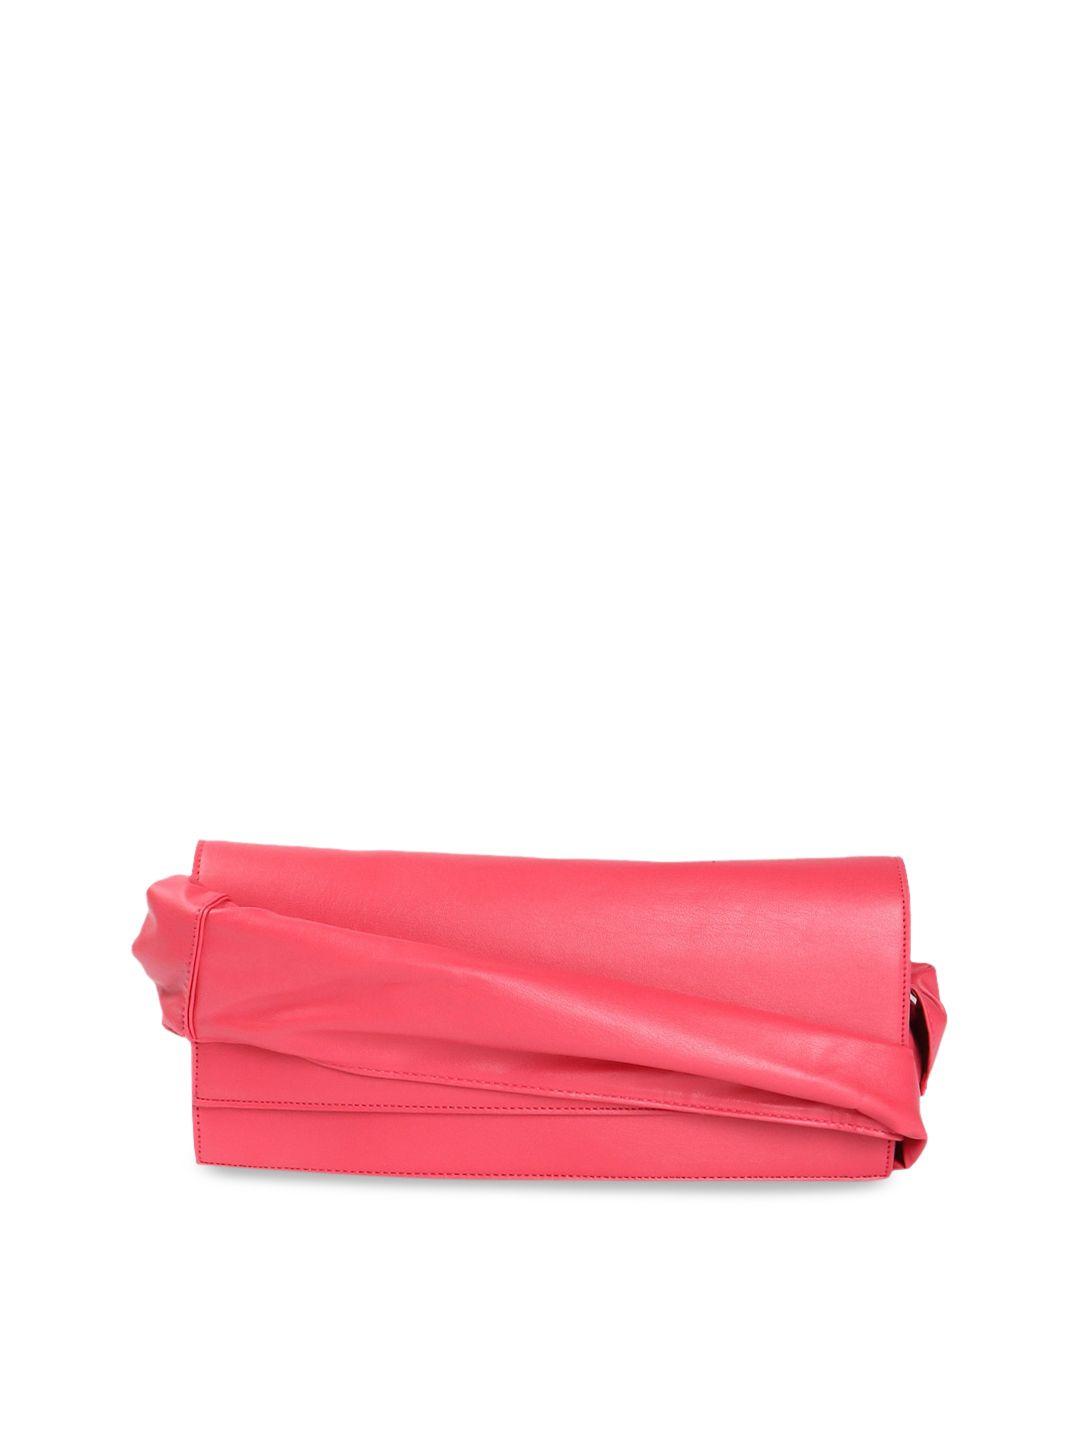 forever-21-women-fuchsia-pink-solid-envelope